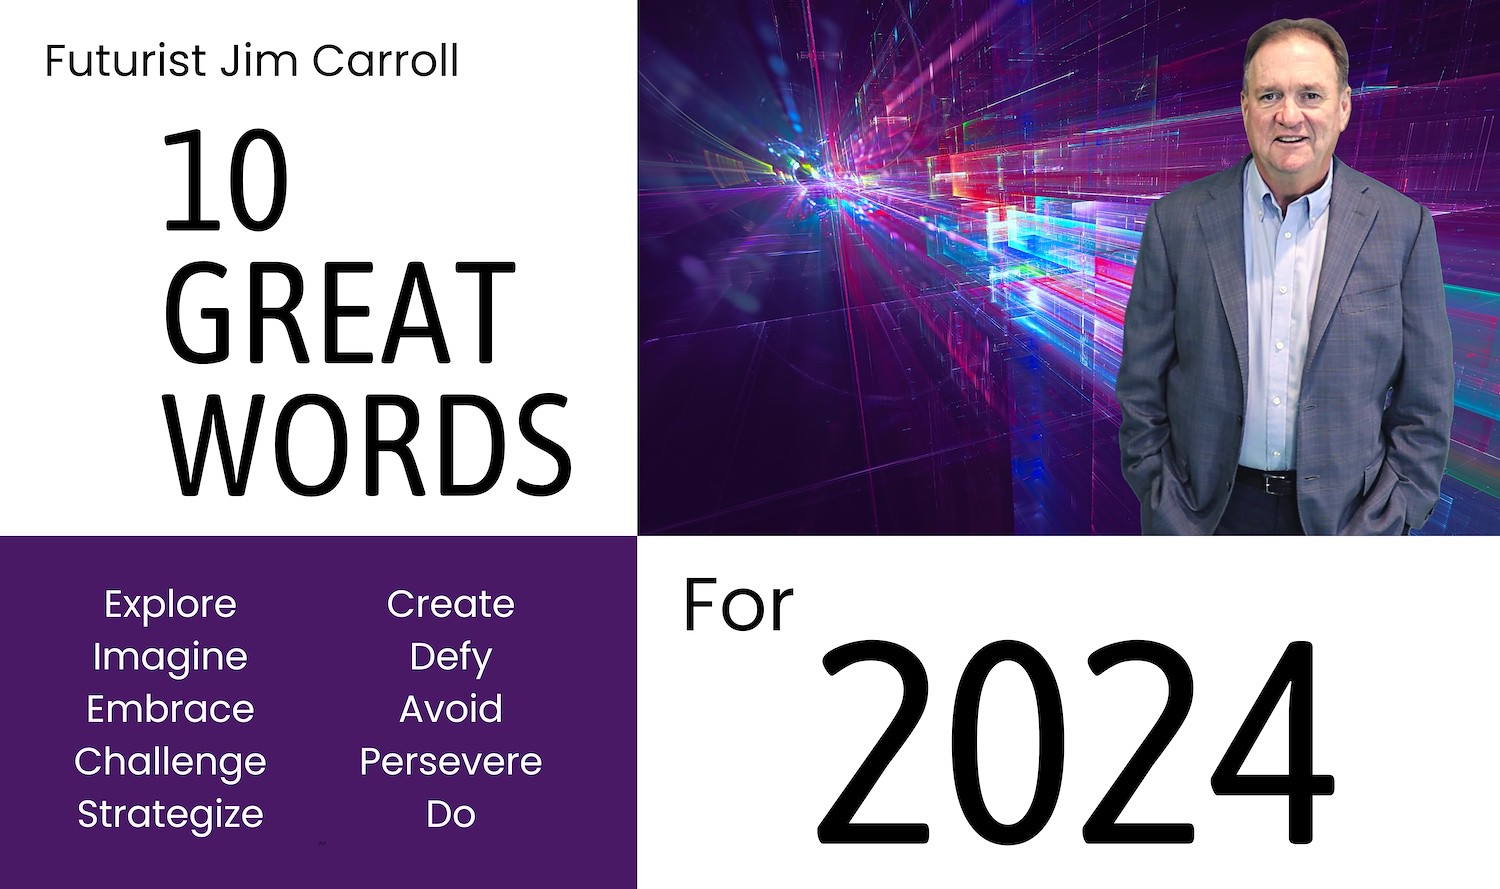 "10 Great Words for 2024 - Explore, Imagine, Embrace, Challenge, Strategize, Create, Defy, Avoid, Persevere, Do!" - Futurist Jim Carroll